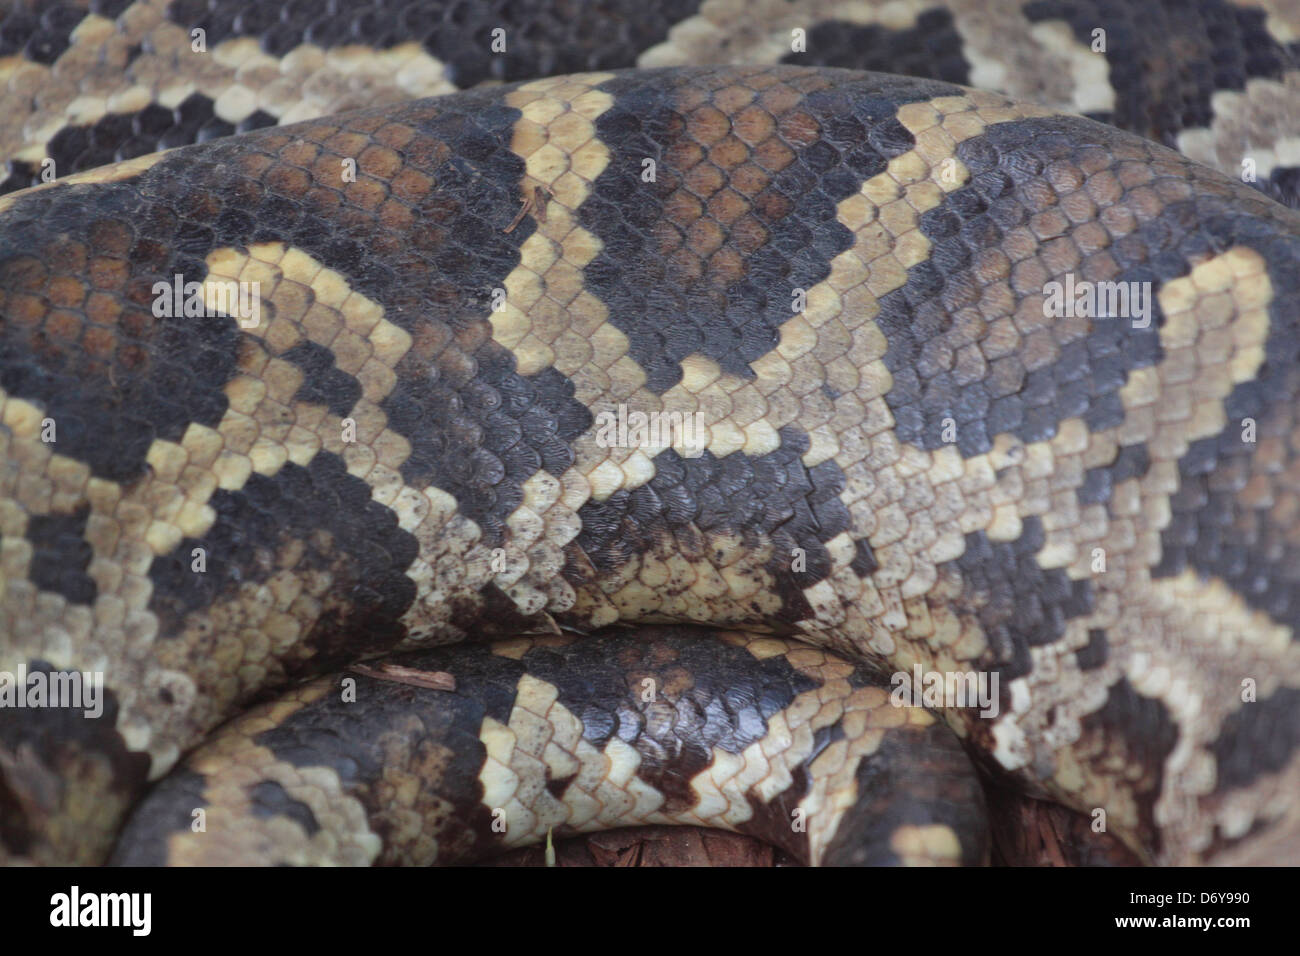 Le boa de la Thaïlande,il un serpent de la peau. Banque D'Images